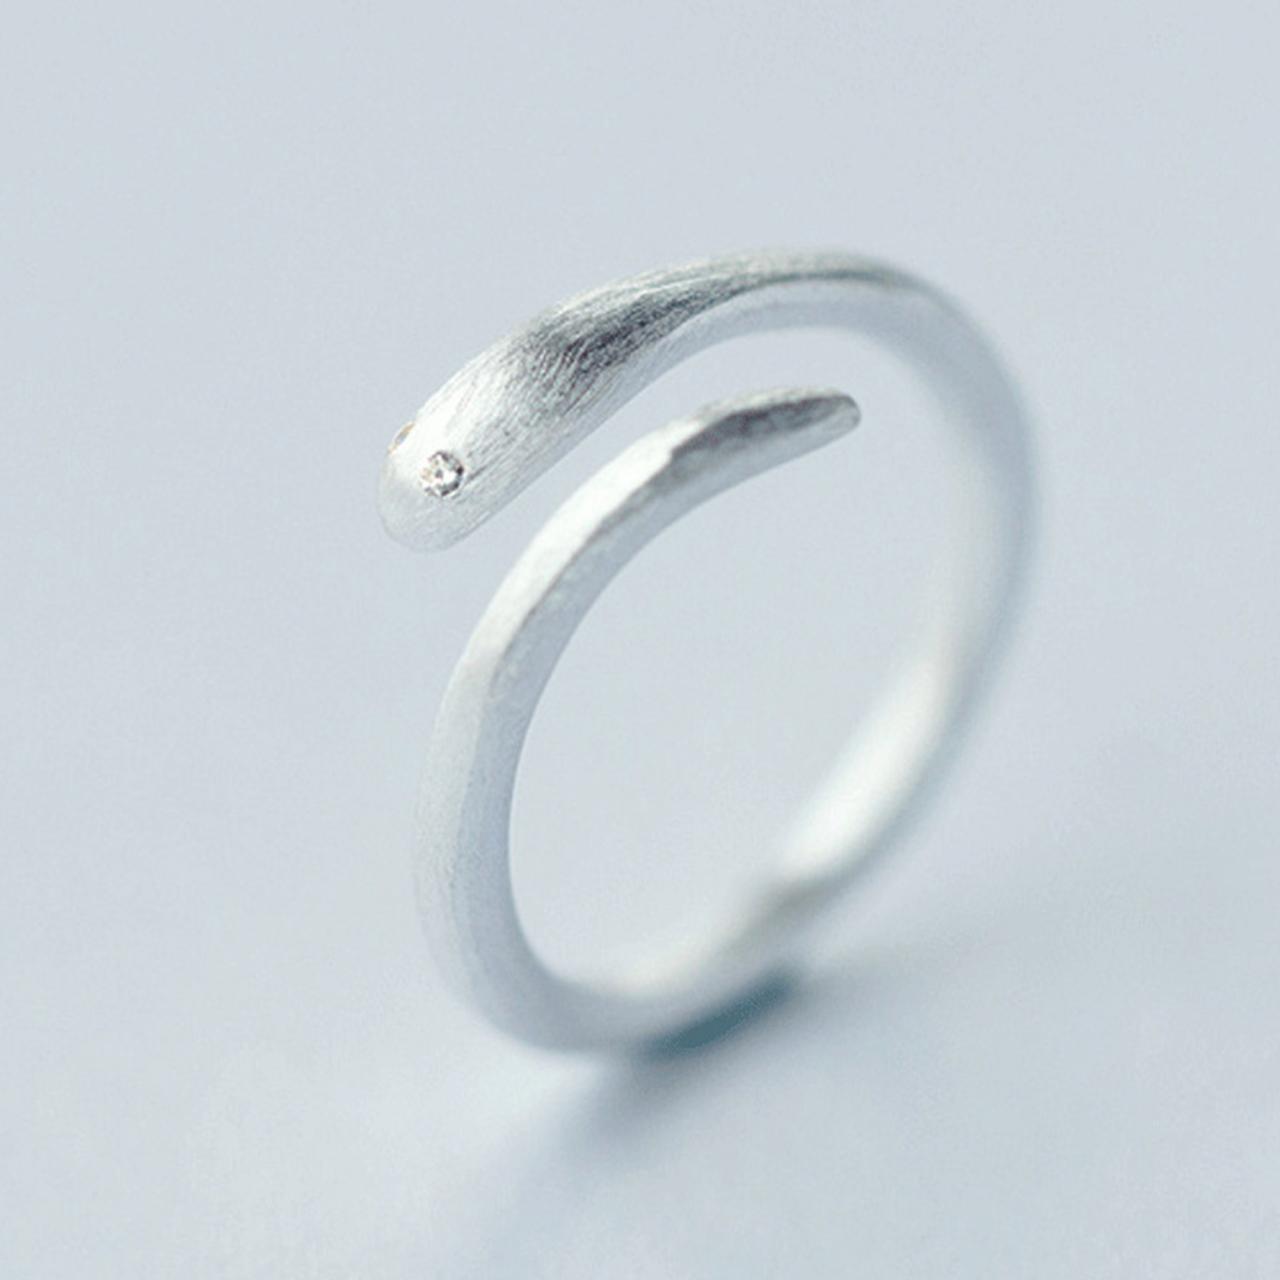 Filigree Snake Ring, Sterling Silver Adjustable Snake Ring, Minimalist Rings, Dainty Ring, Women Snake Ring, Everyday Jewelry